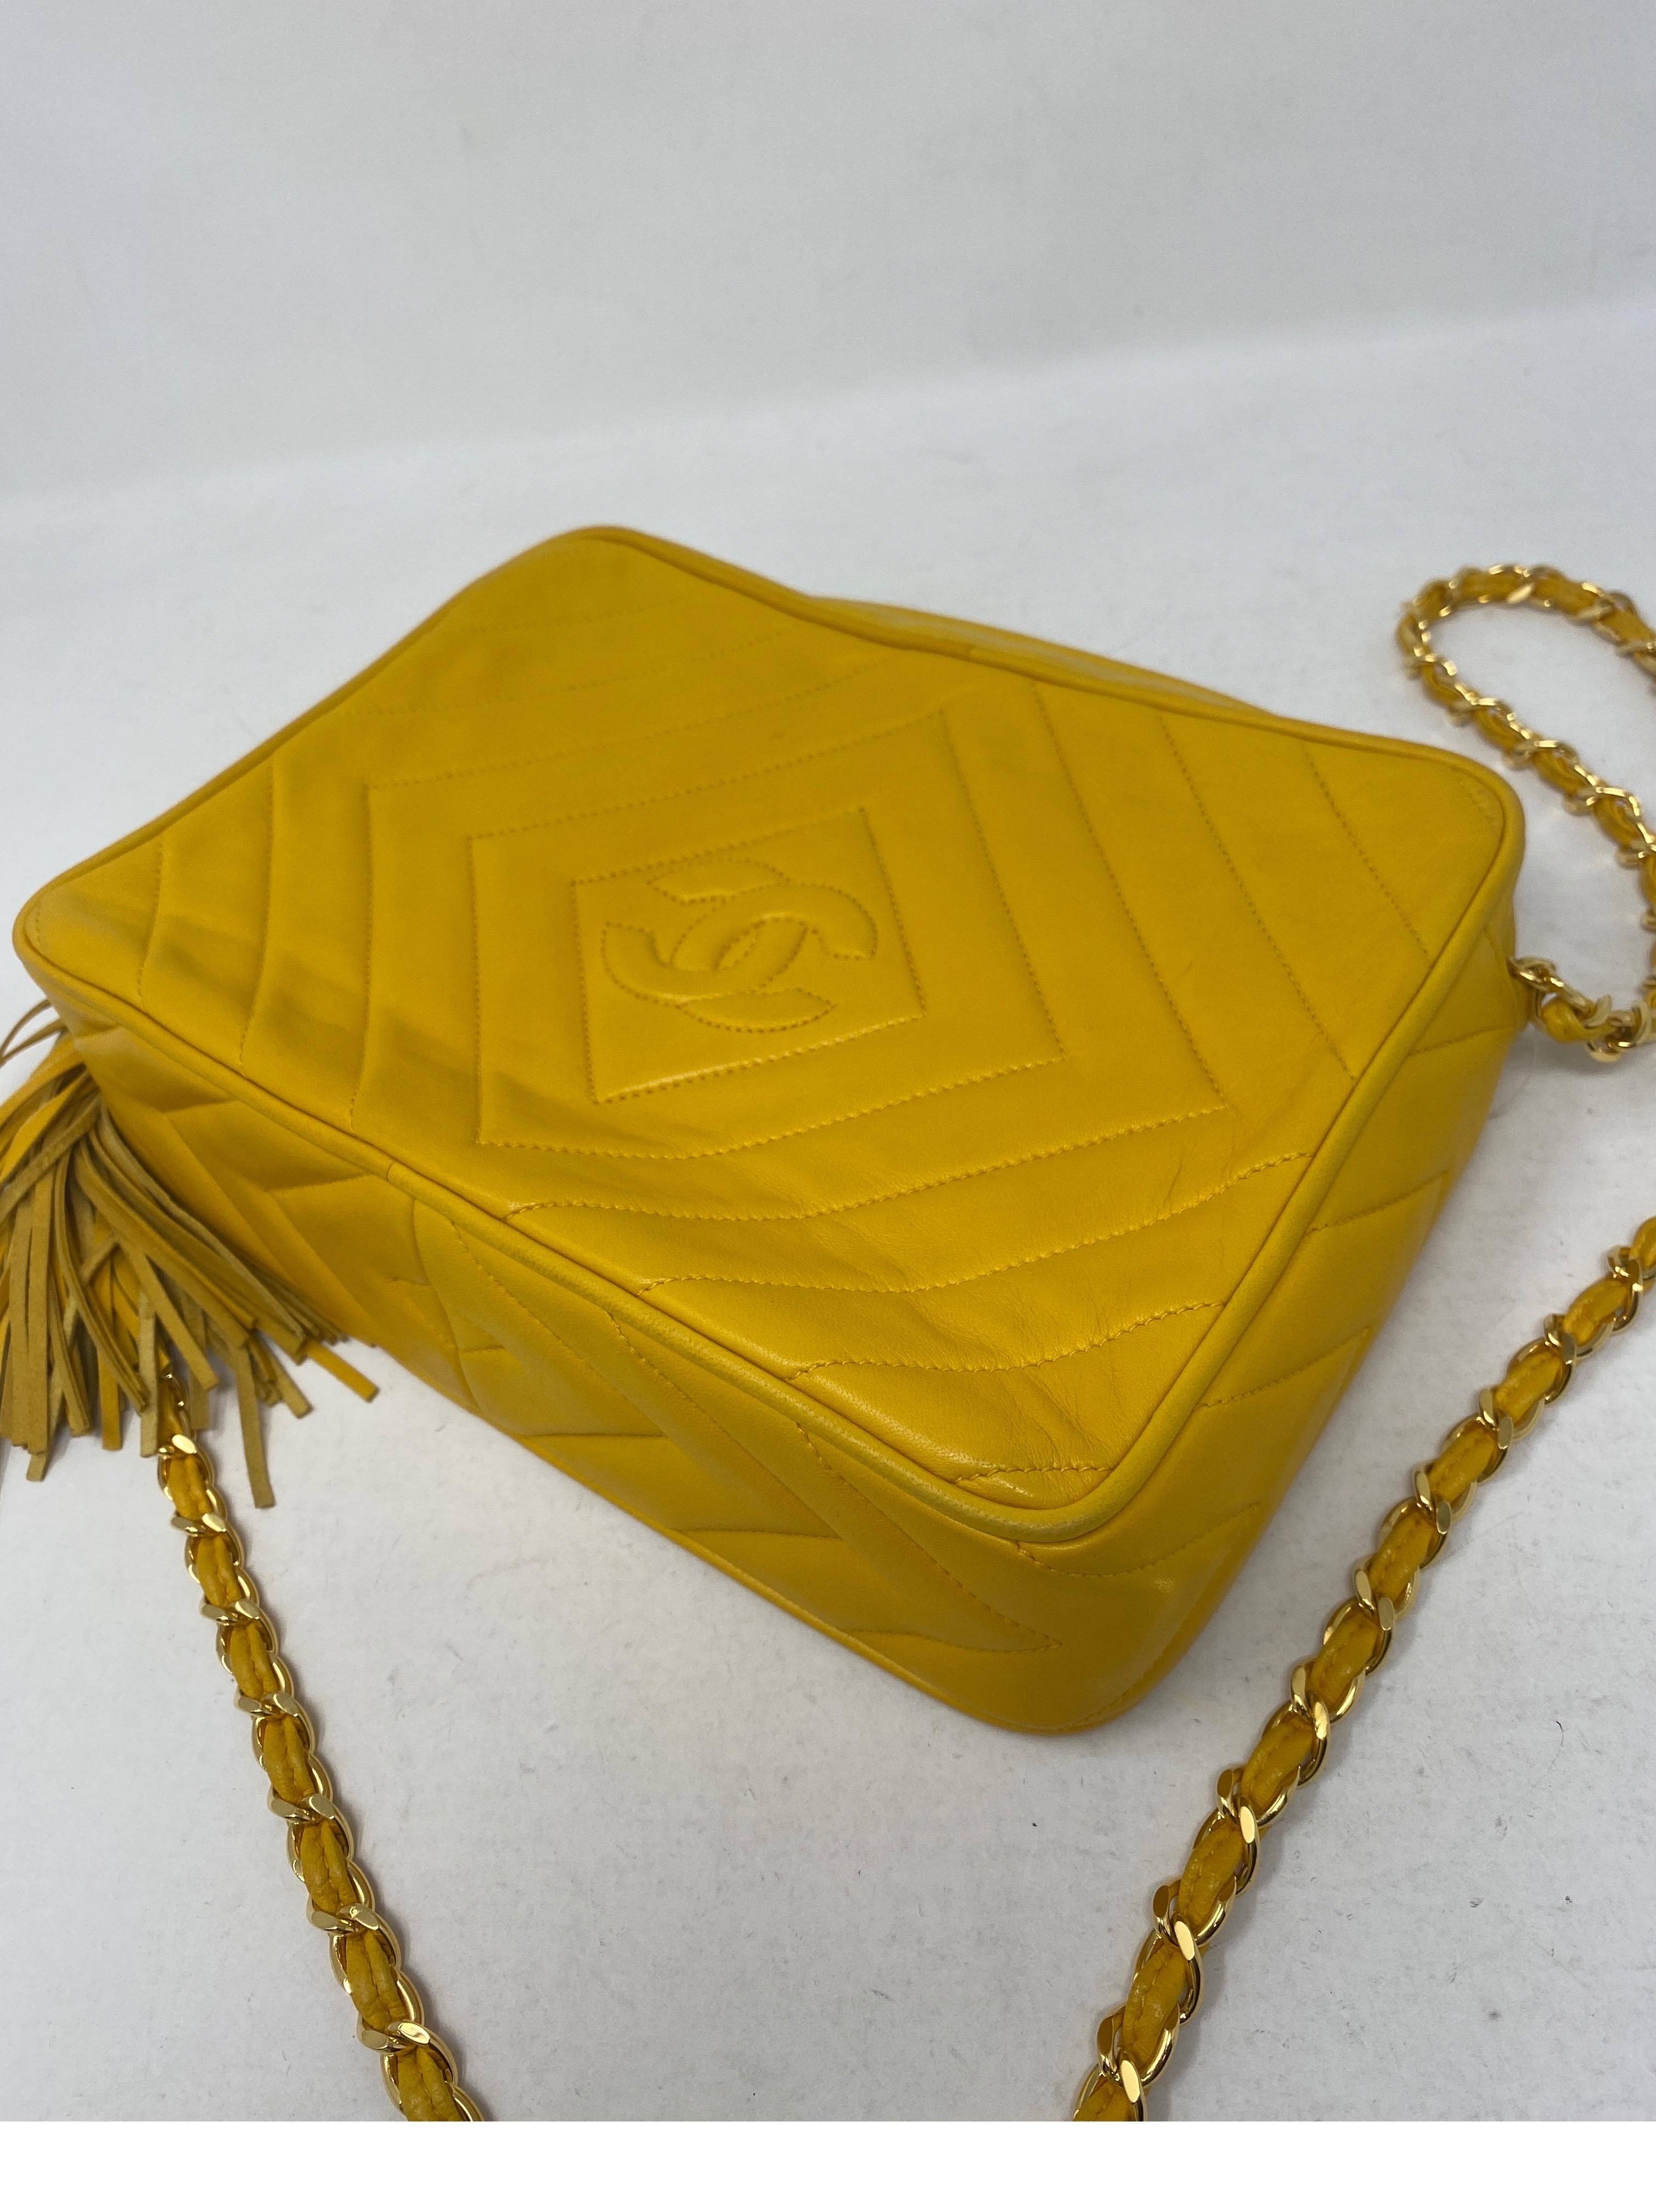 Women's or Men's Chanel Yellow Vintage Tassel Bag 